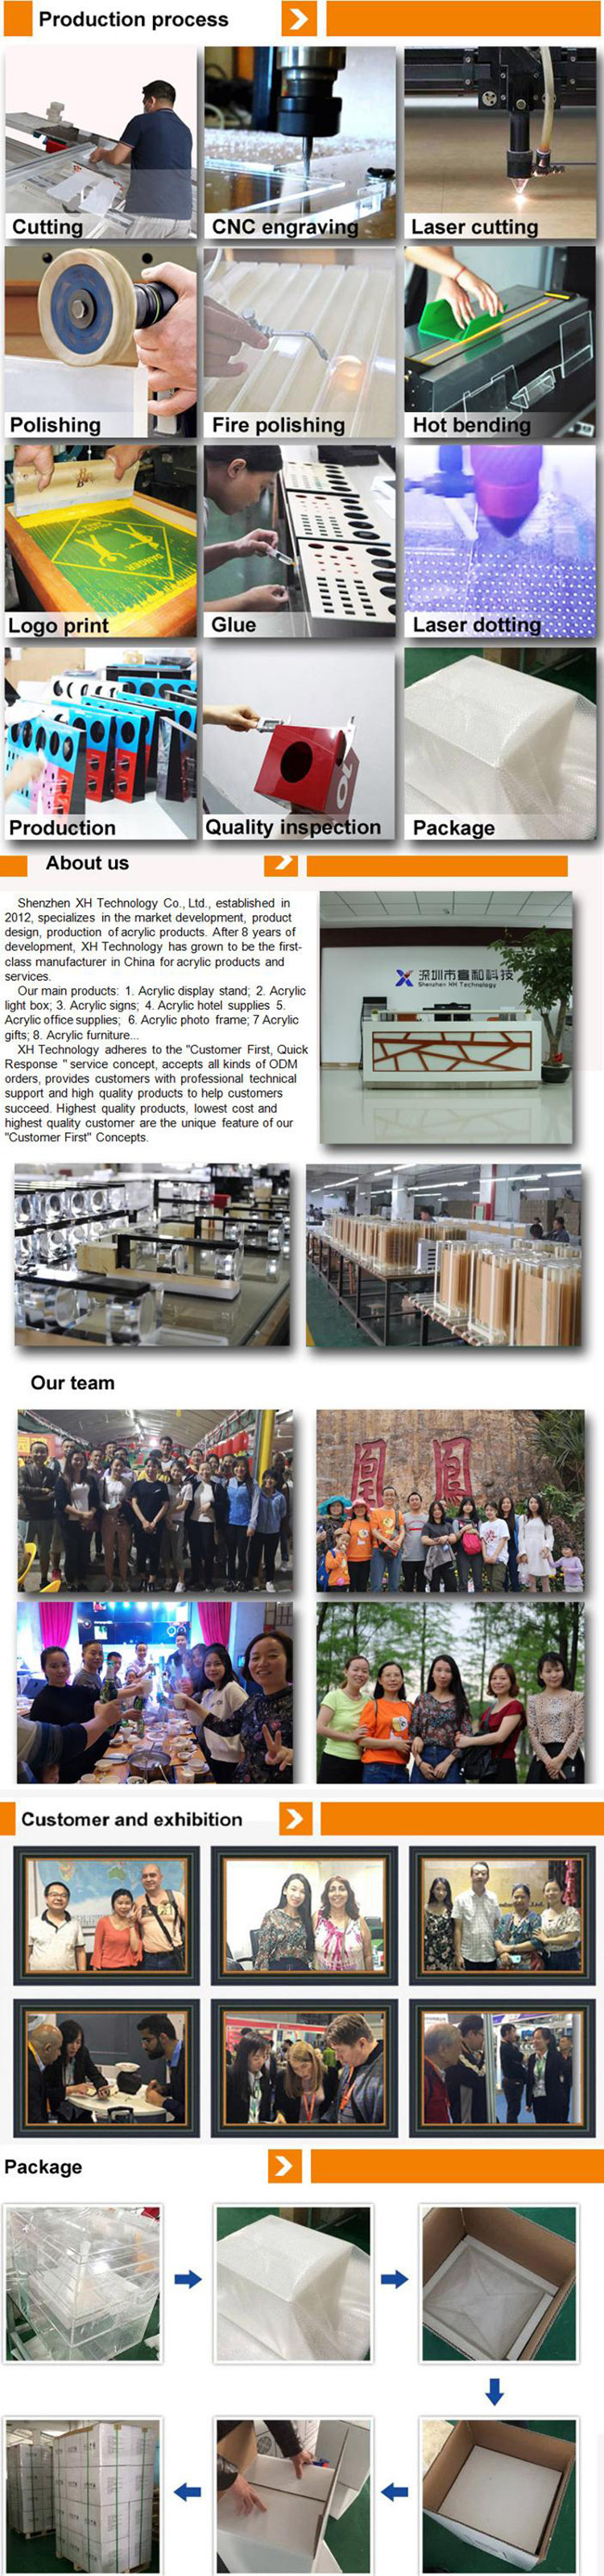 China Eco - Friendly Acrylic Shapes Craft Custom Gifts Blanks Design Plaque Award Souvenir factory